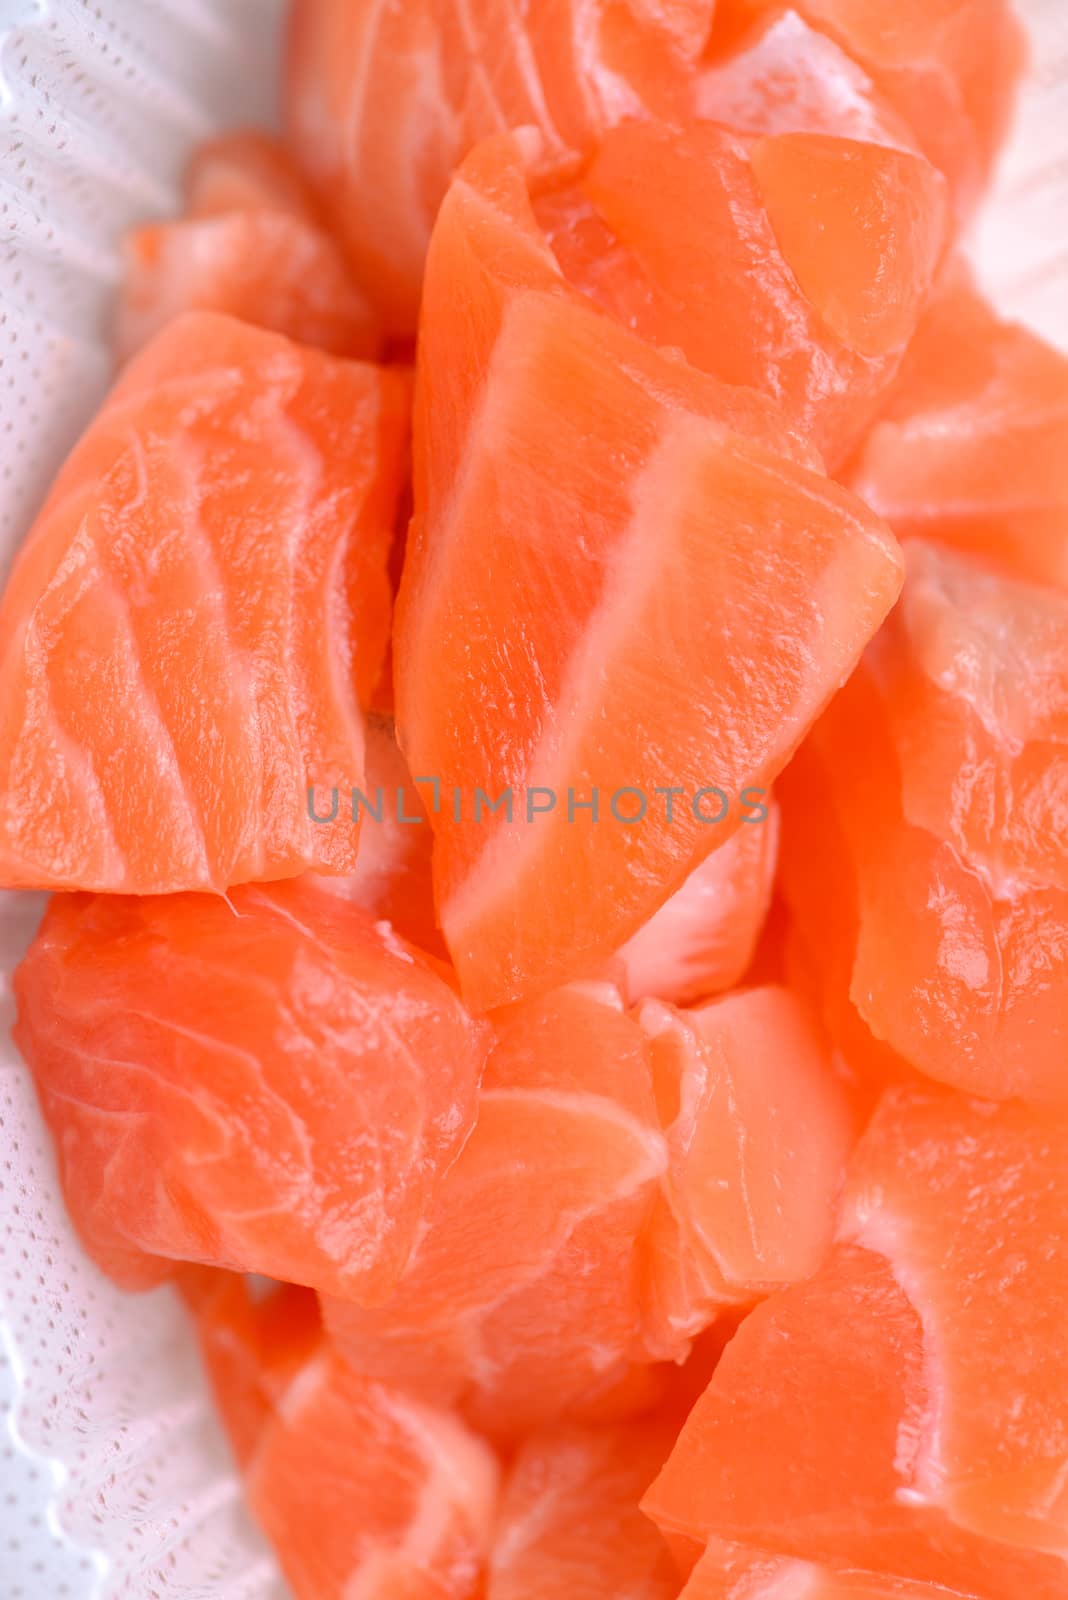 salmon slice by antpkr